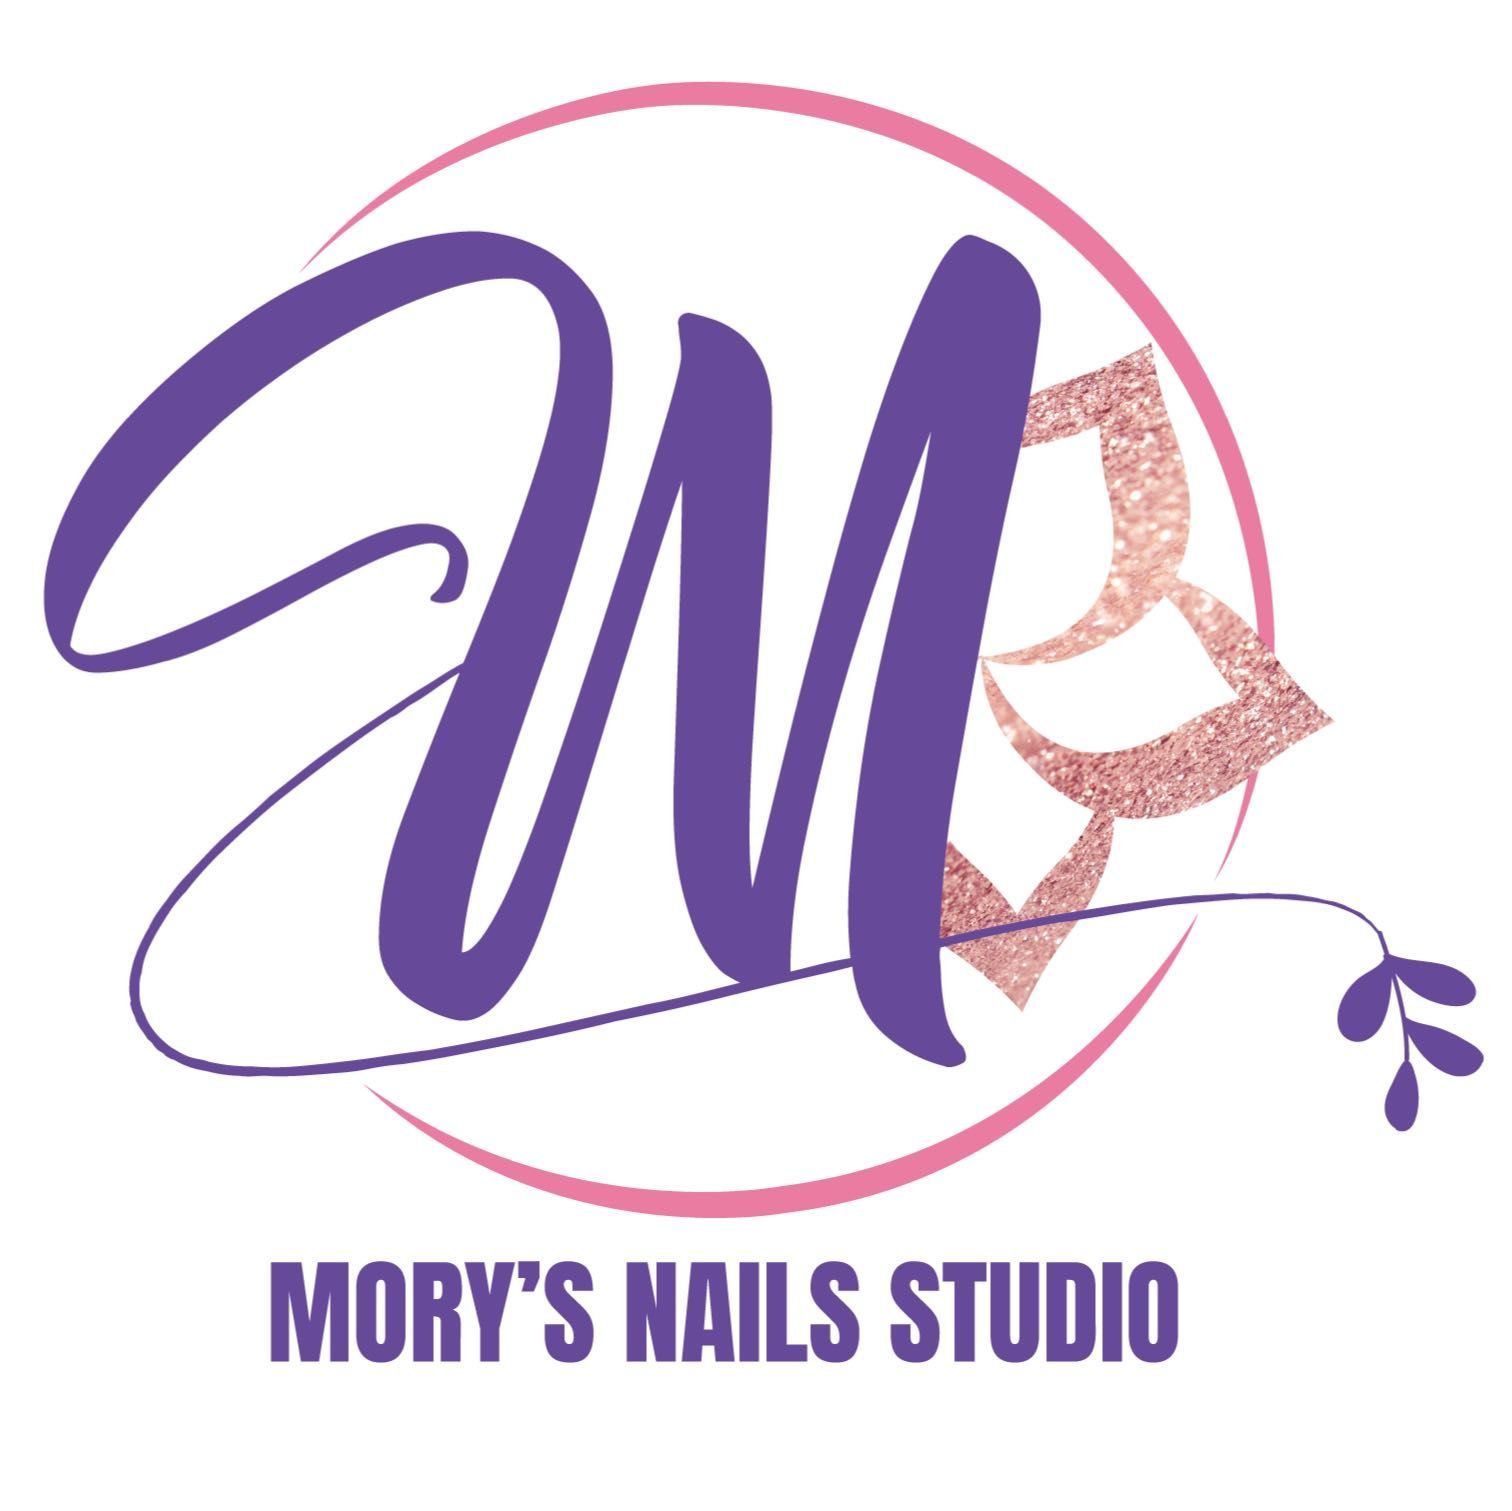 Mory’s Nails Studio, 6138 Margie Ct, Orlando, 32807